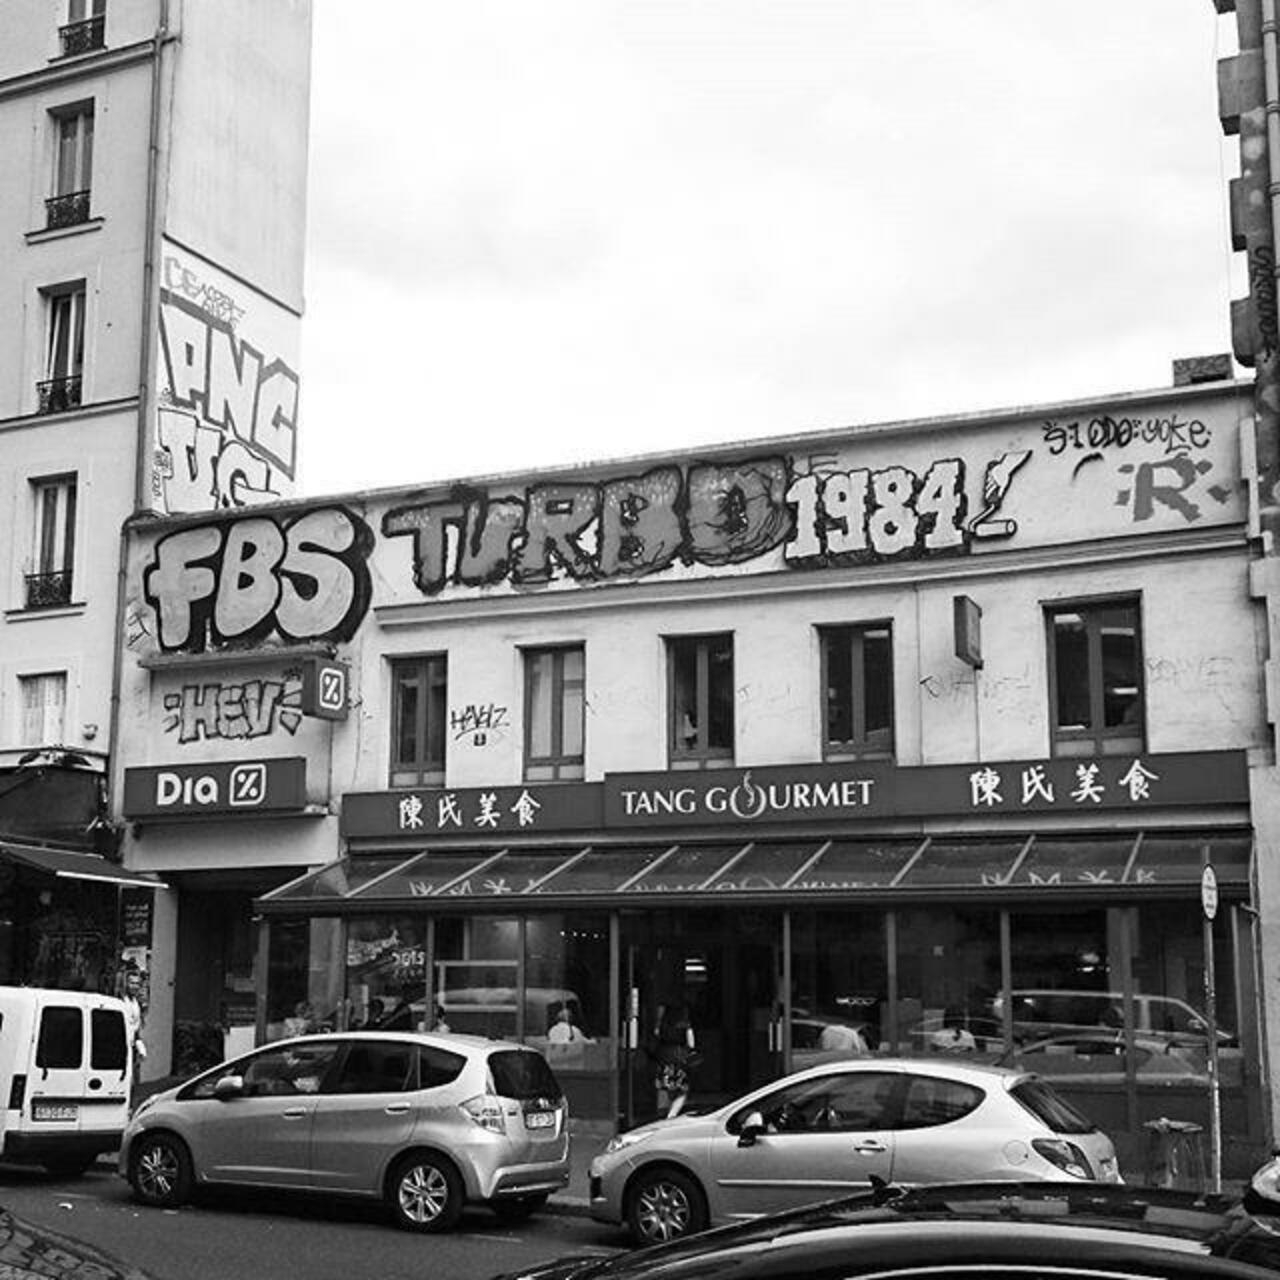 RT @StArtEverywhere: #graffiti #paris #streetartparis #rooftop #vandalart #blacknwhite #streetphotography #muralart #streetart #graffpor… http://t.co/F6hbM8bORN